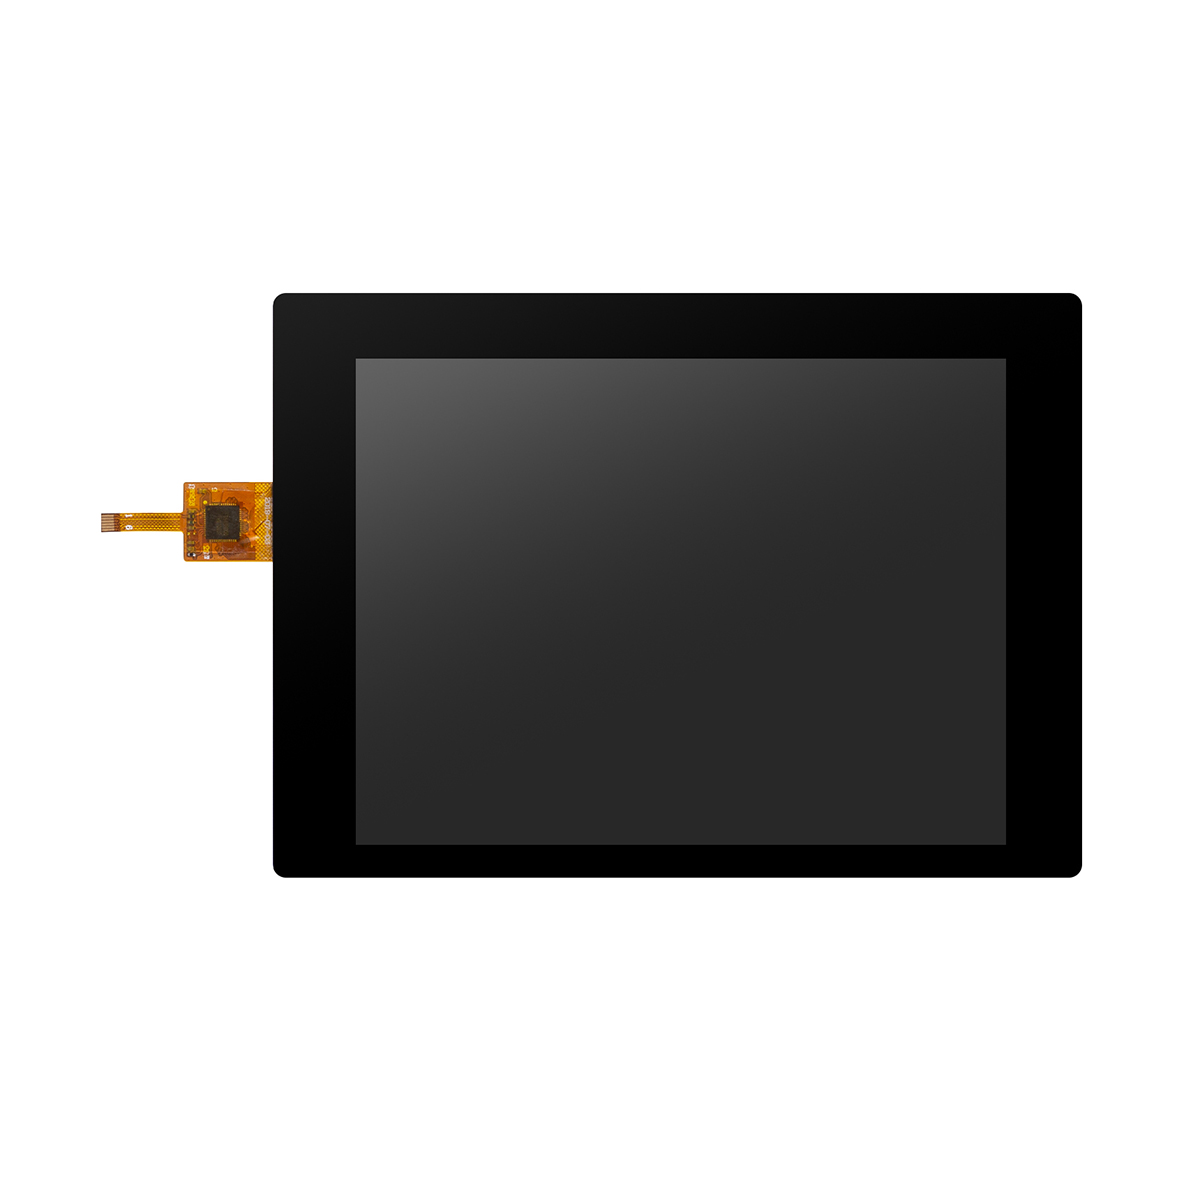 5.7inch Glass Panel LCD Touchscreen pontsho e ikemiseditseng Featured Image